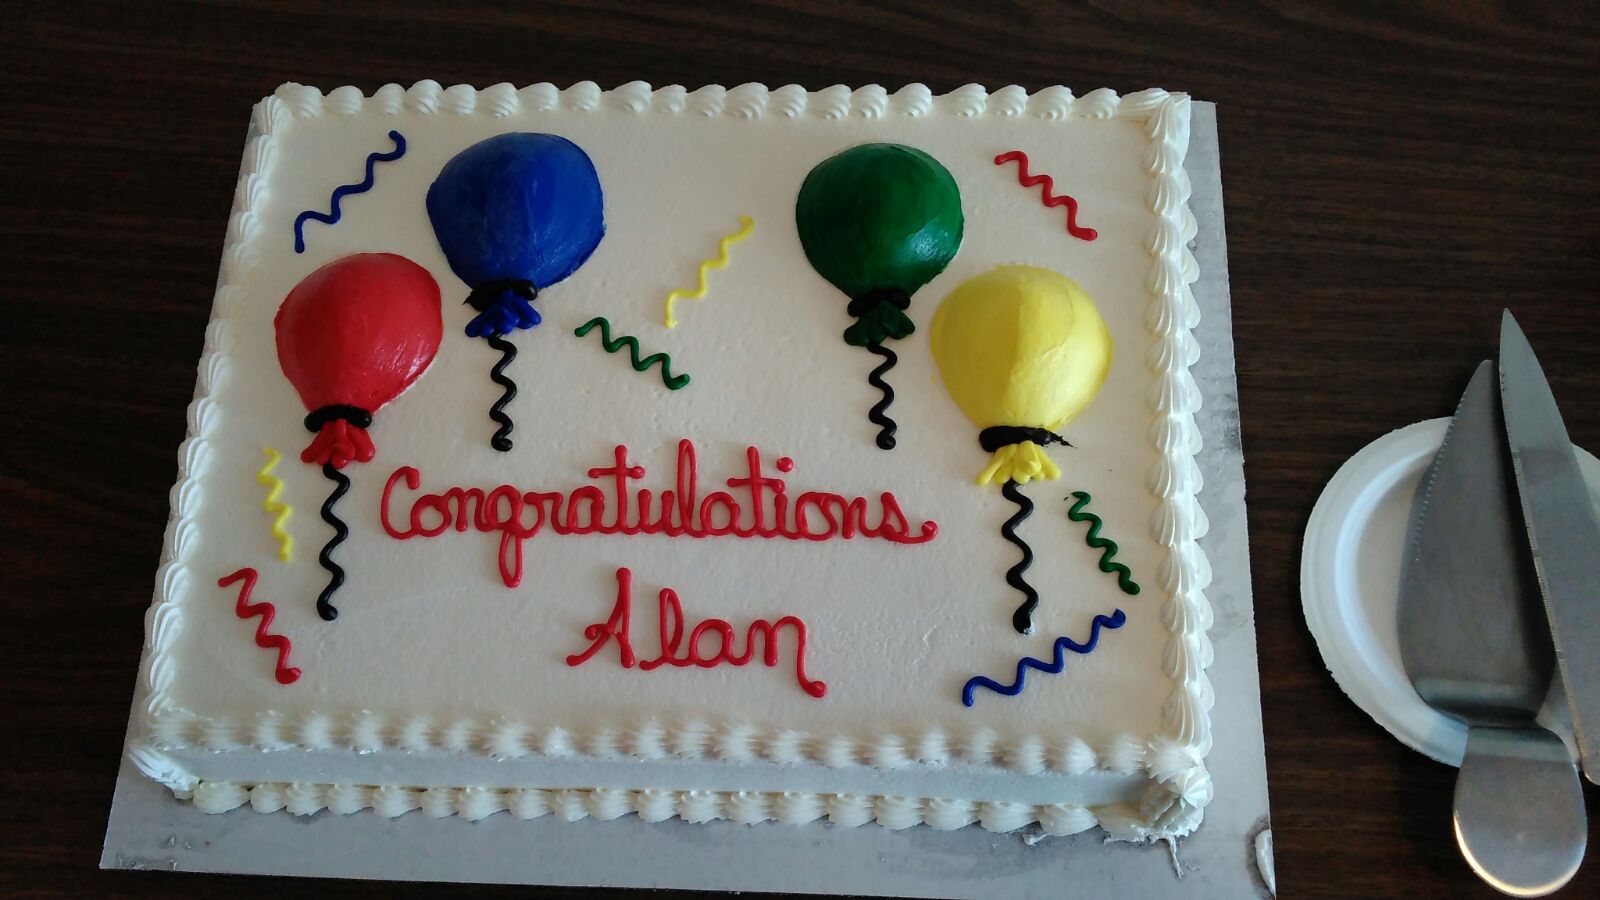 Alan's successful MSc defense celebration